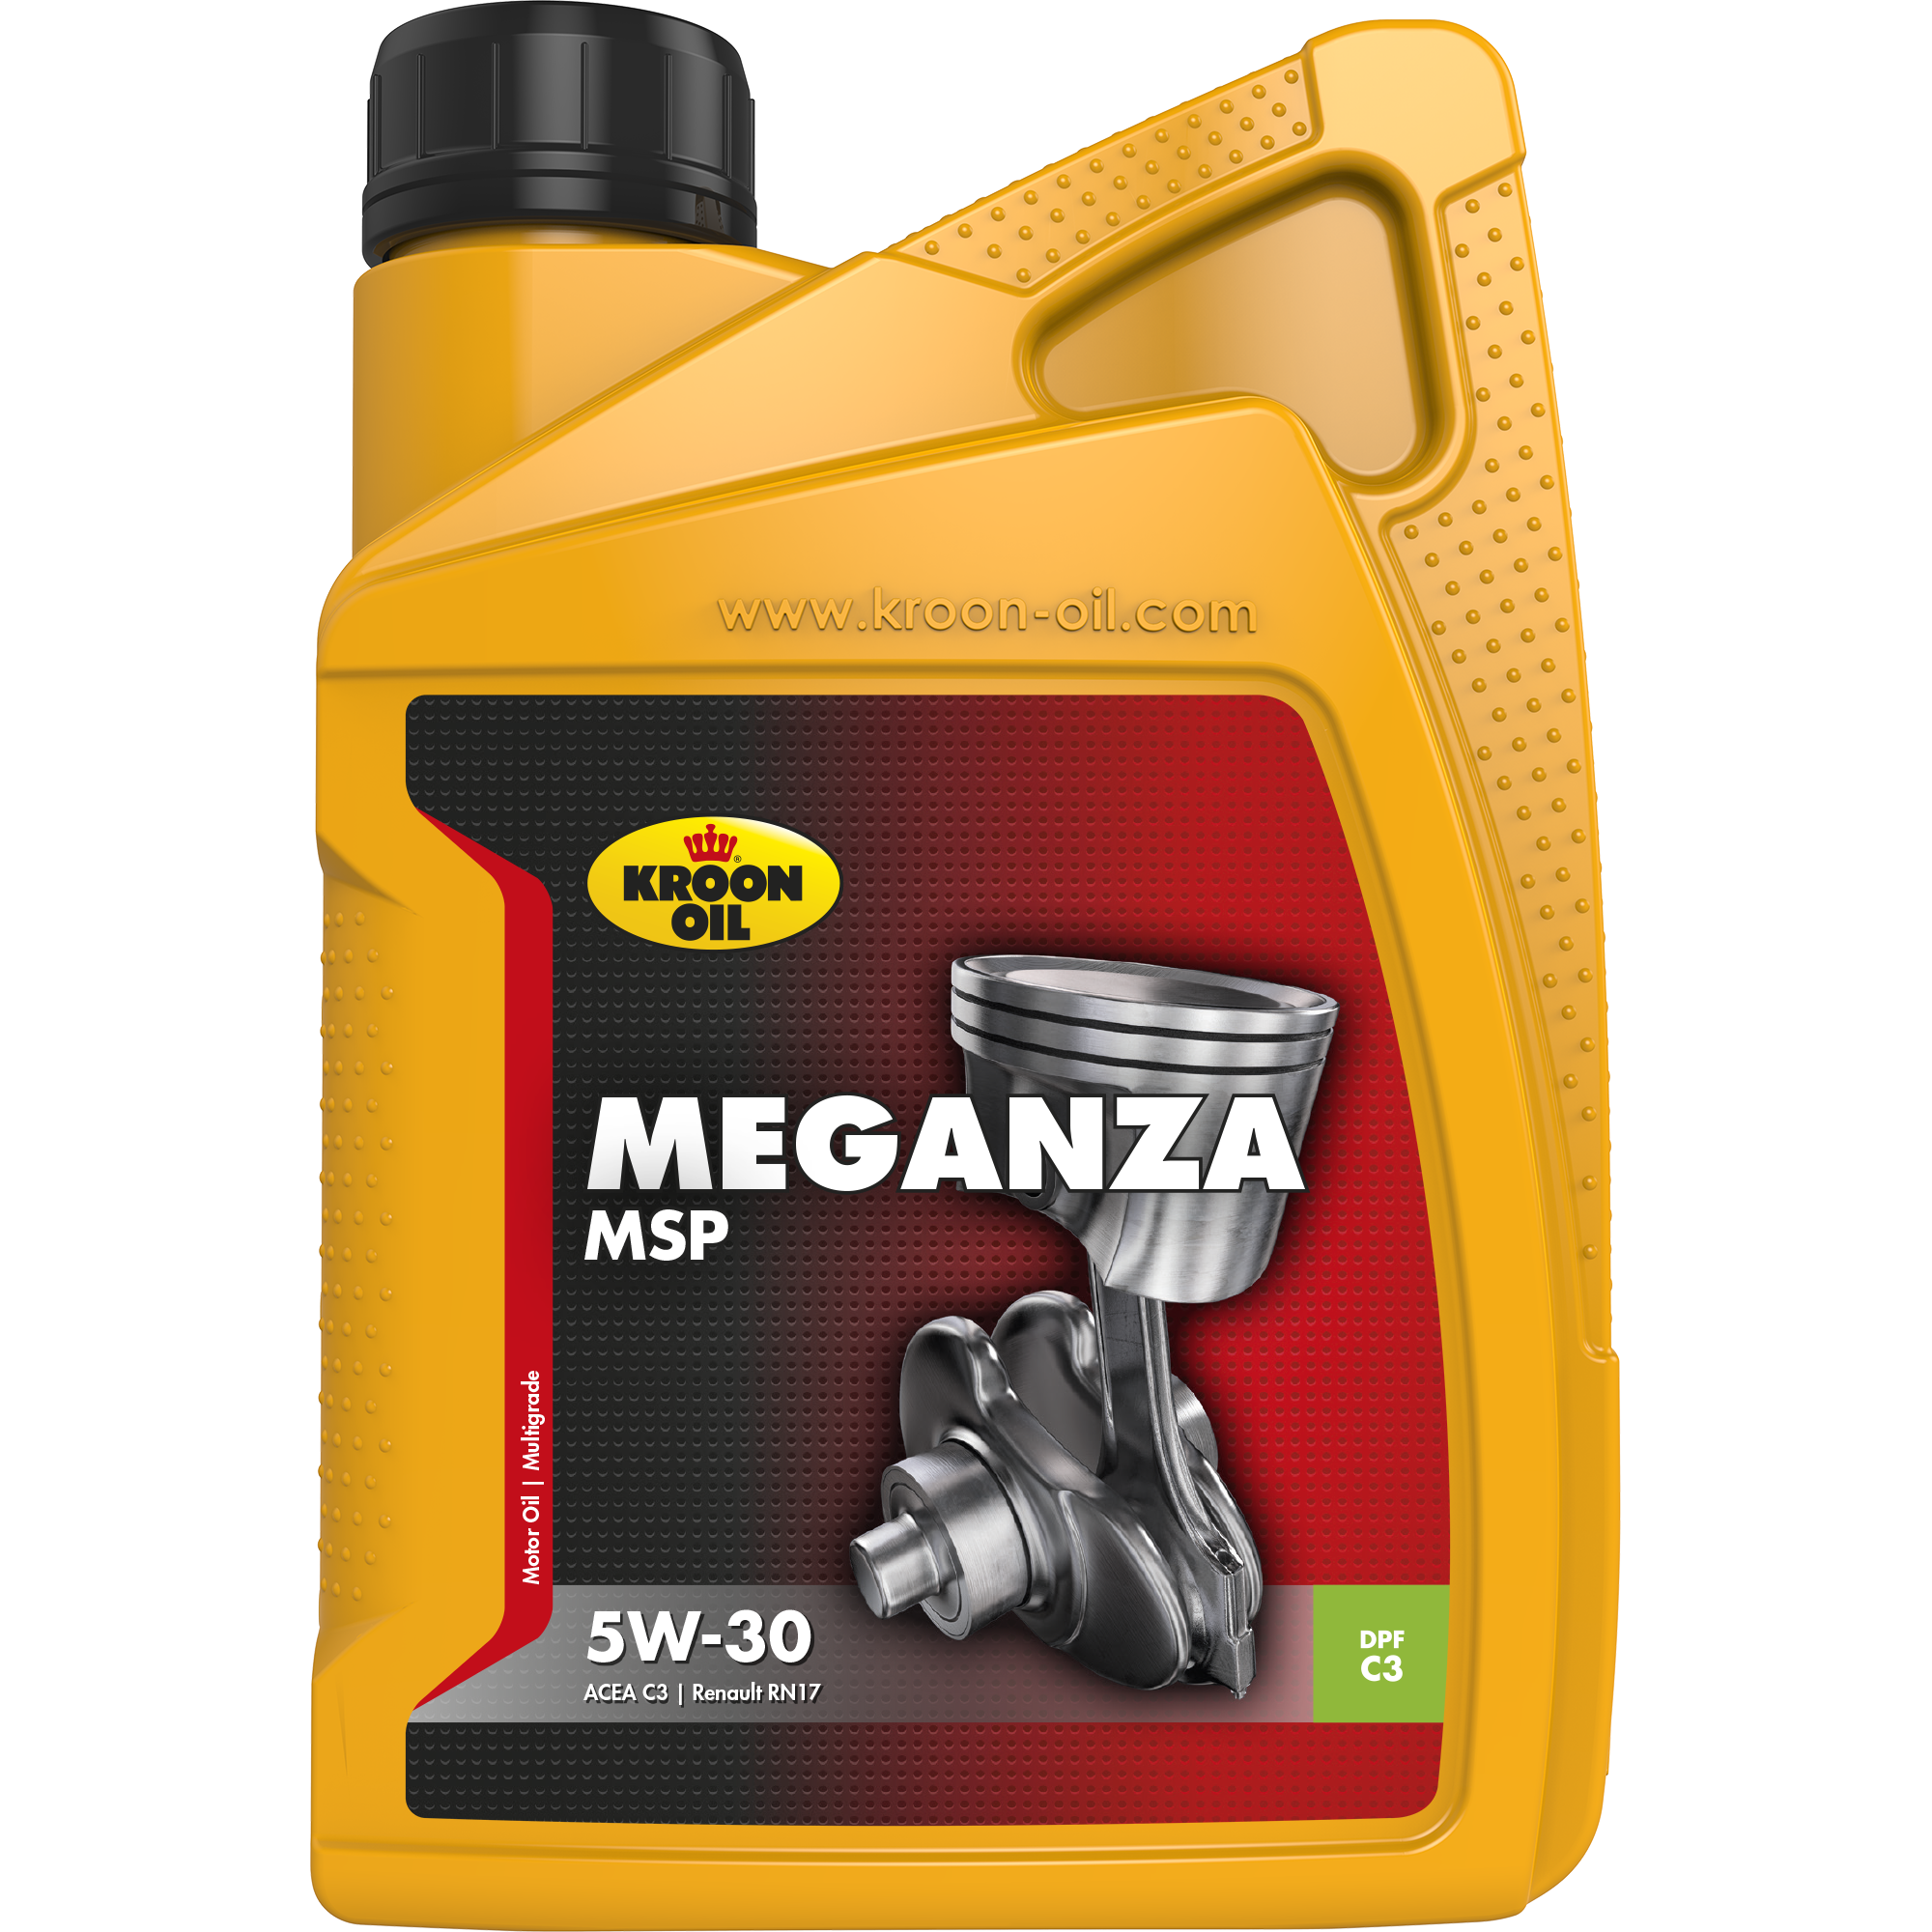 Kroon-Oil Meganza MSP 5W-30, 1 lt (OUTLET)